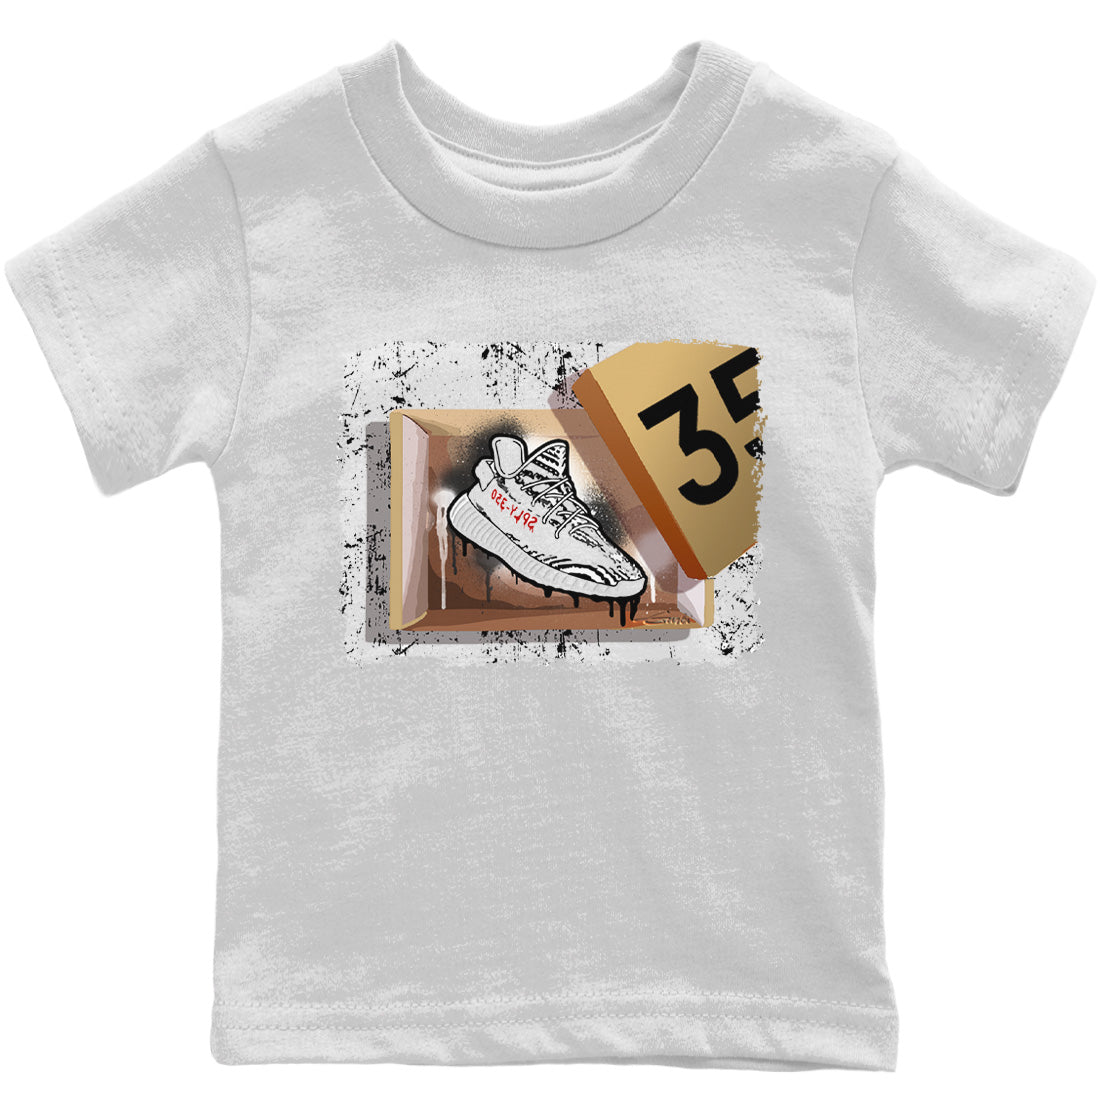 Yeezy 350 Zebra Sneaker Match Tees New Kicks Sneaker Tees Yeezy 350 Zebra Sneaker Release Tees Kids Shirts